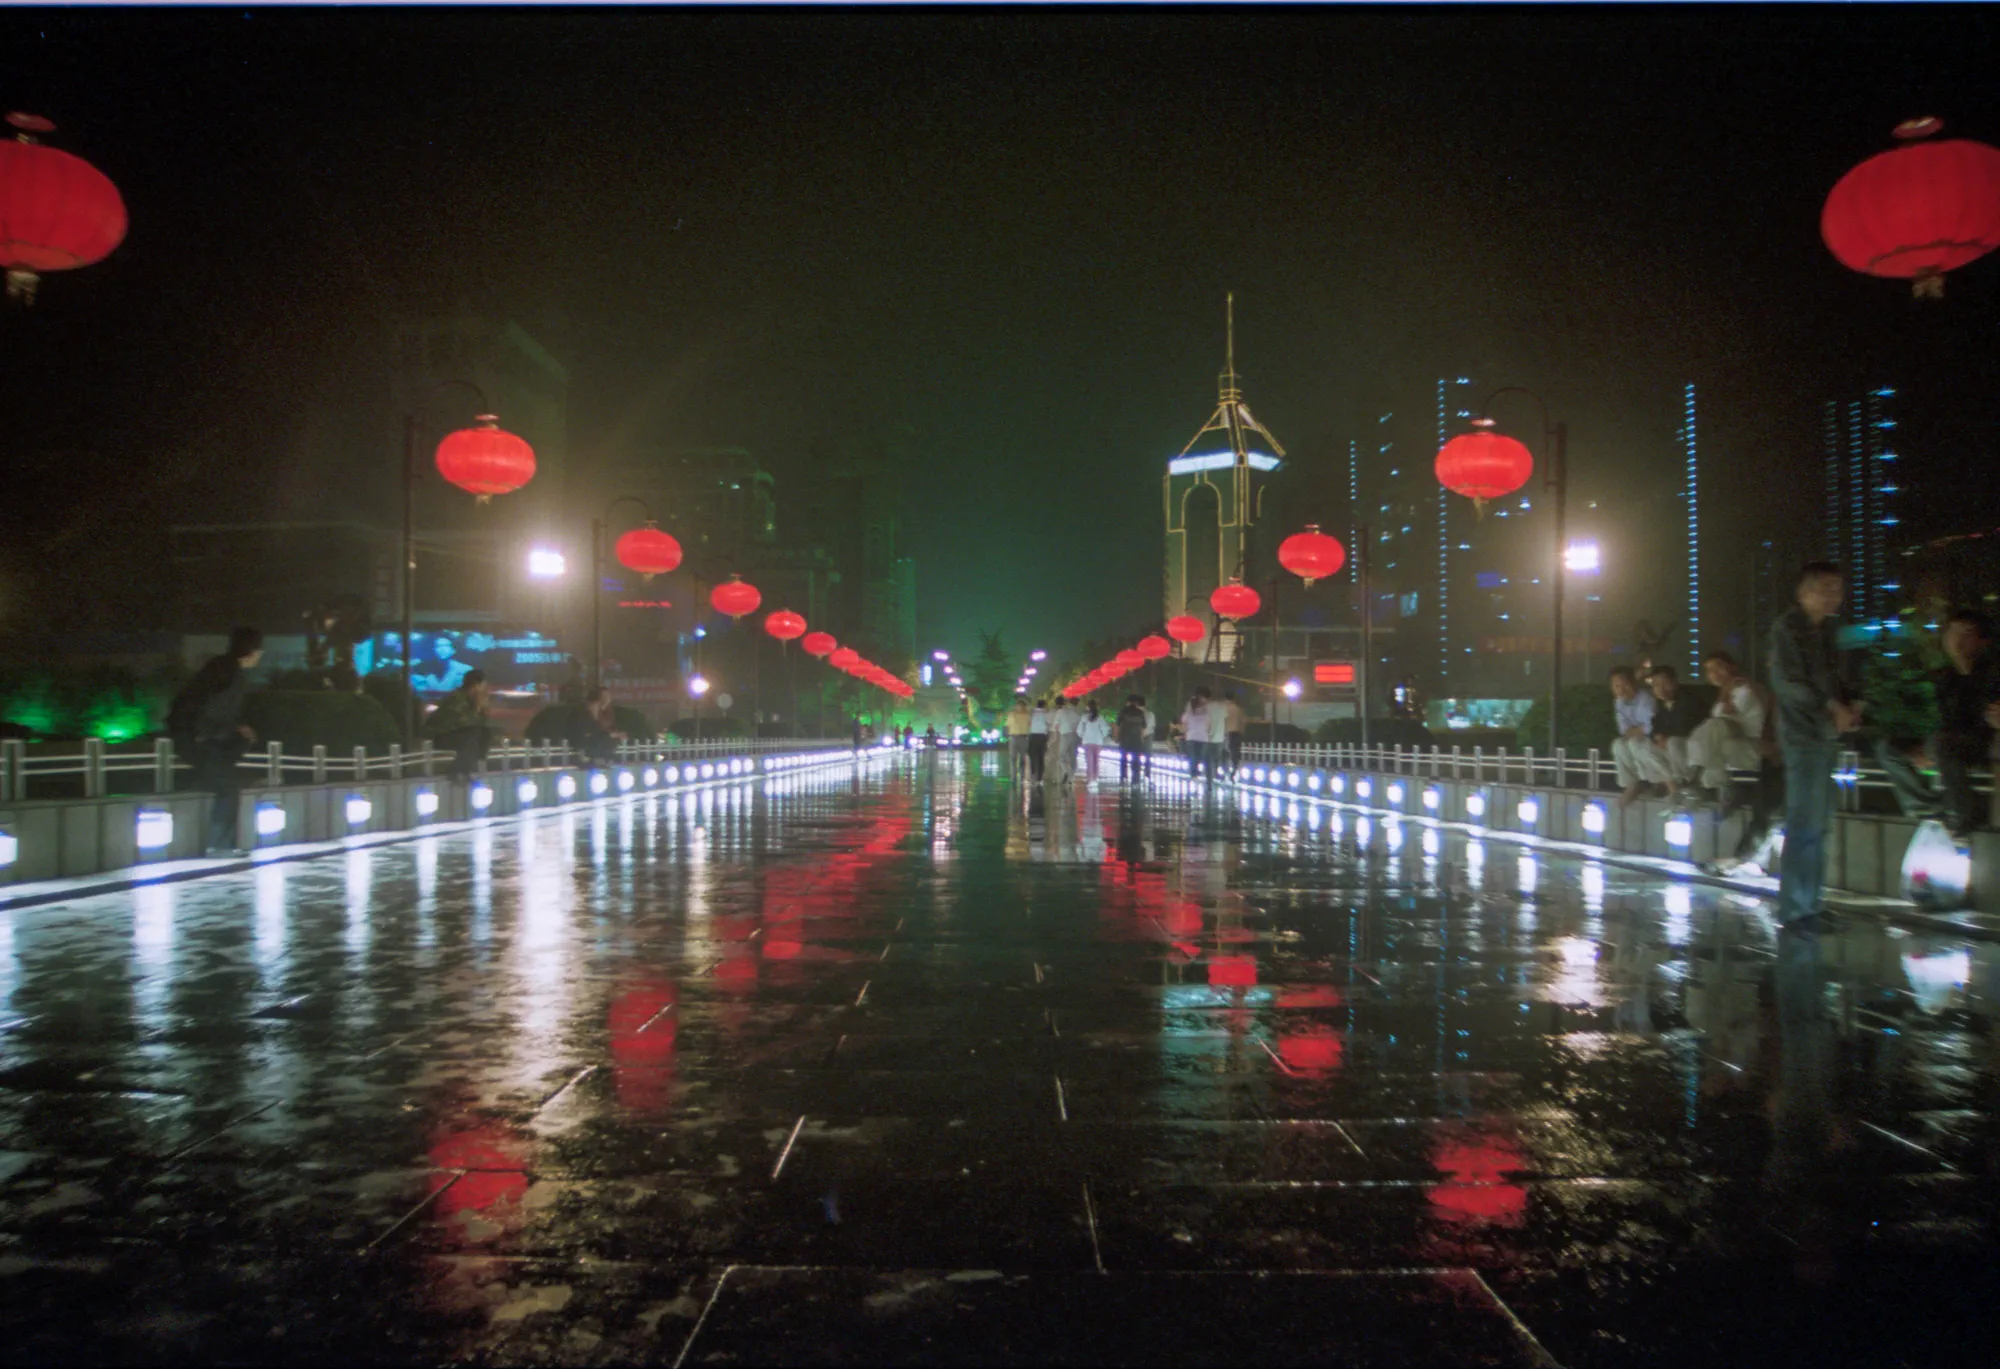 Lighting the way to Xi'an